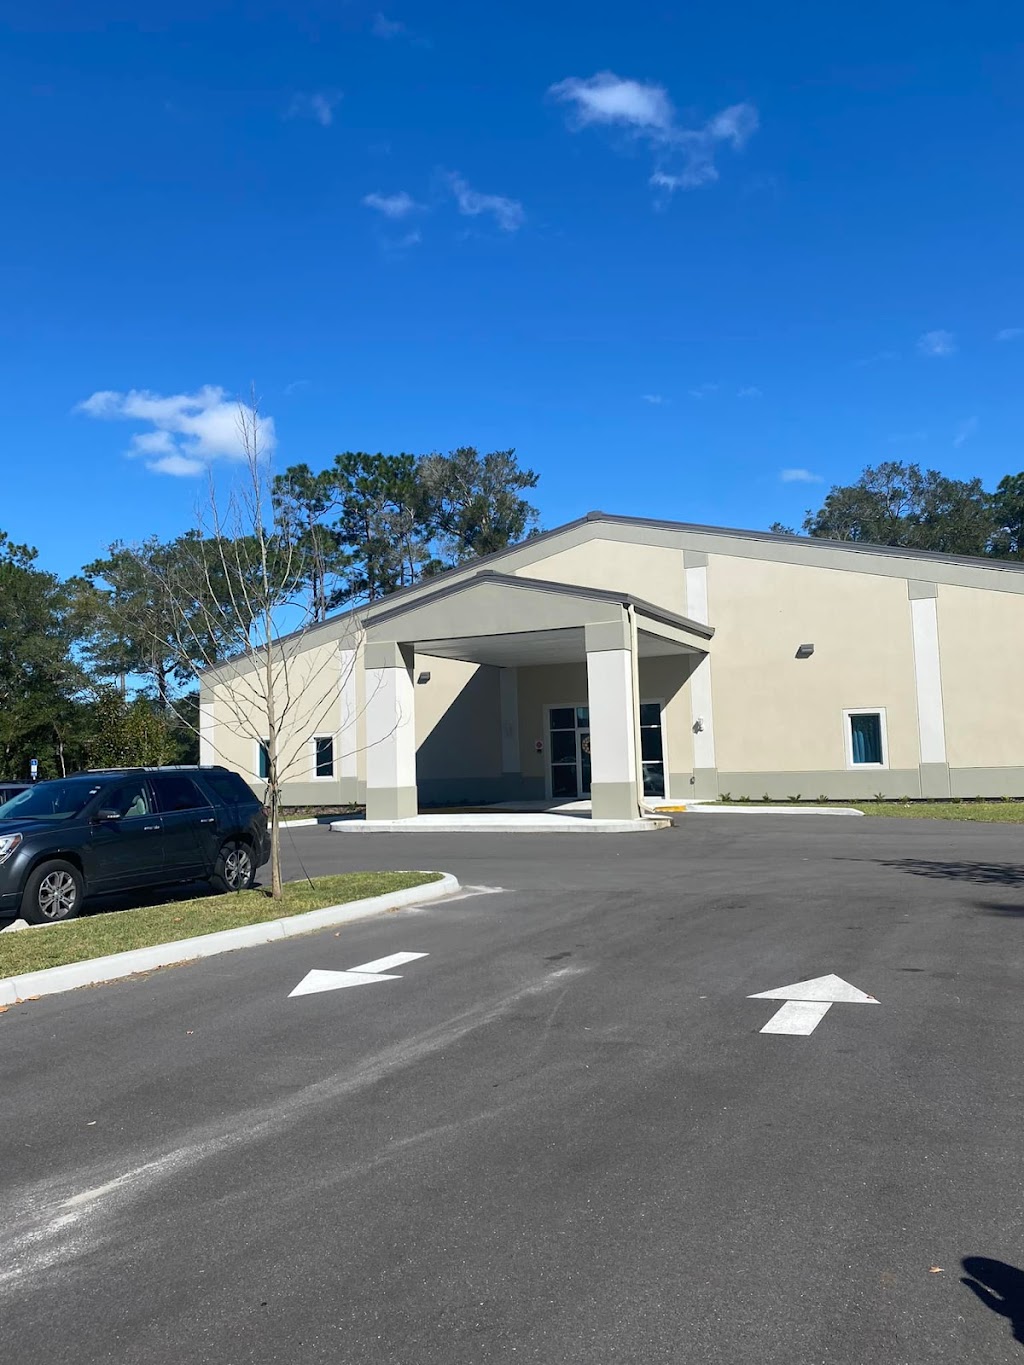 New Covenant Baptist Church of DeLand | 1350 Blue Lk Ave S, DeLand, FL 32724 | Phone: (386) 873-2583